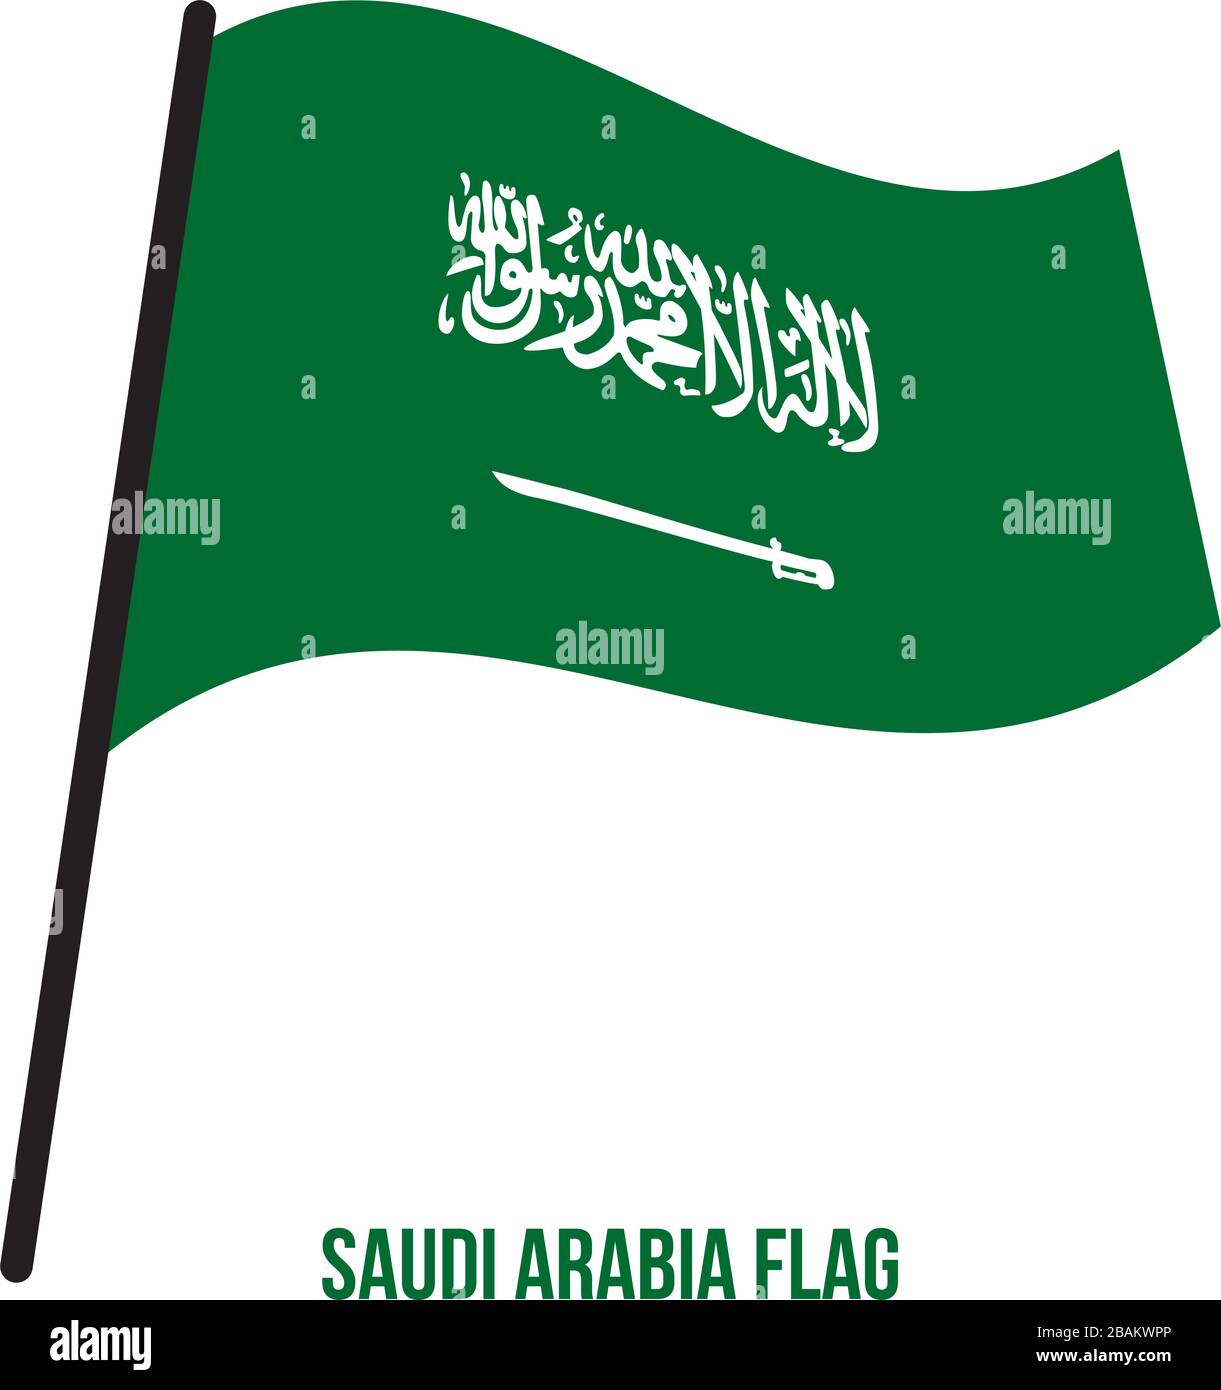 Saudi Arabia Flag Waving Vector Illustration on White Background. Saudi Arabia National Flag. Stock Vector